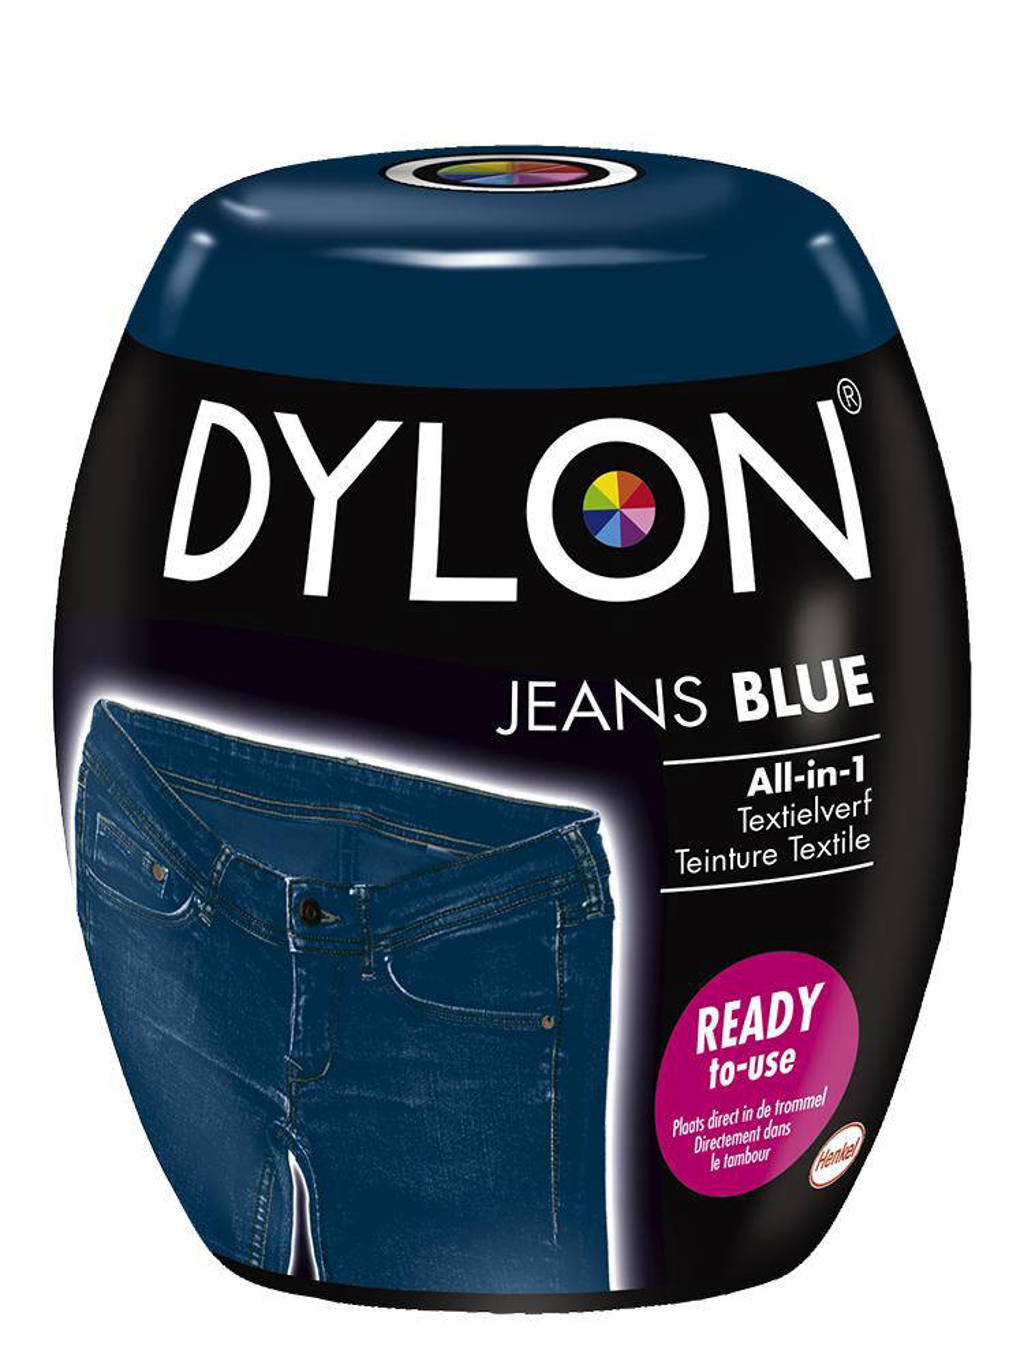 Dylon textielverf pods - Jeans Blue - 3 pods - 3 x | wehkamp